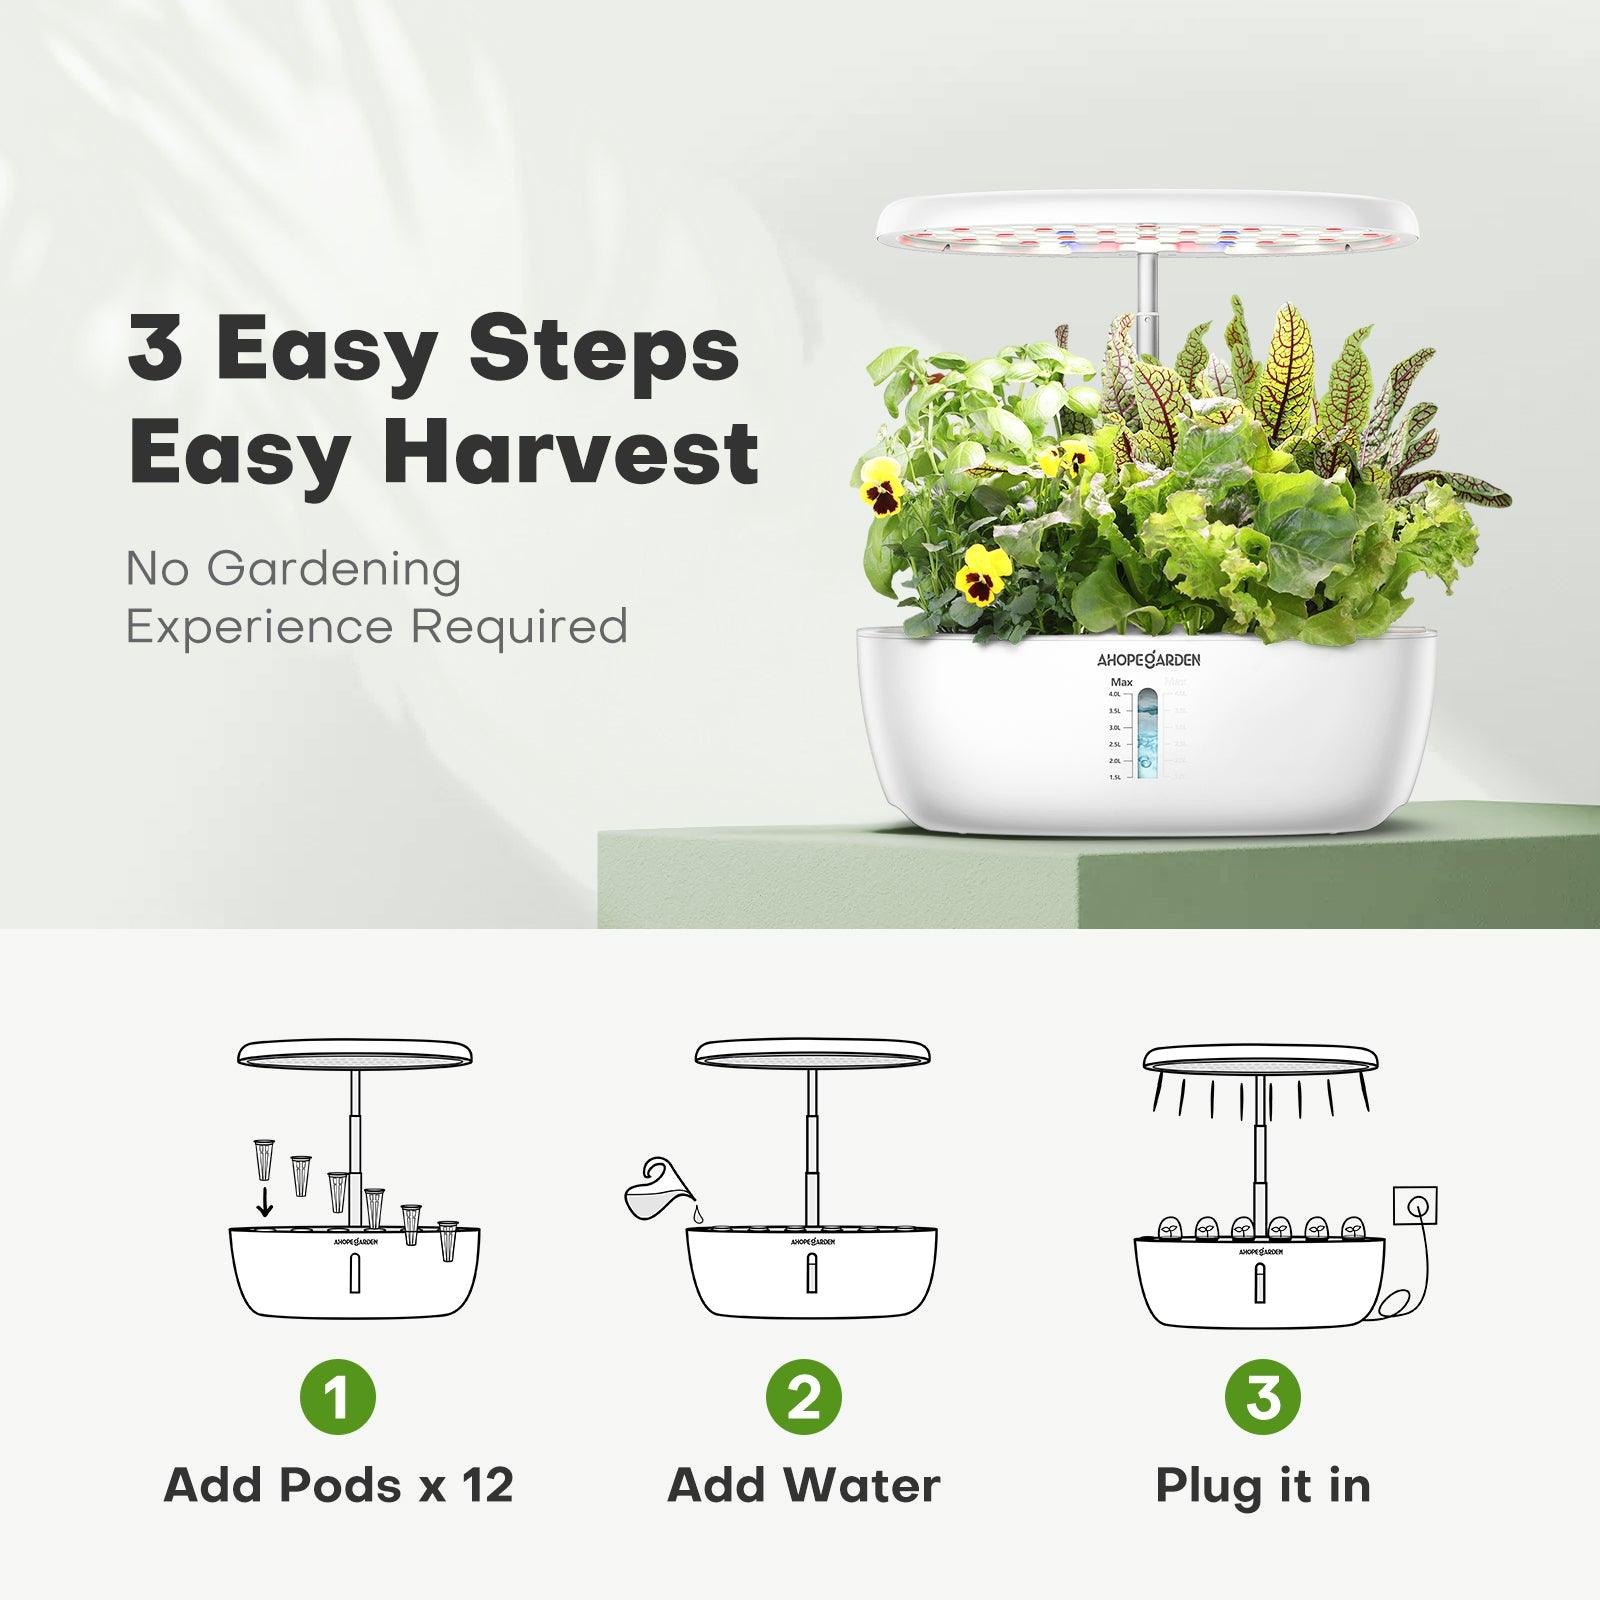  3 Easy Steps to Sst Up 12 Seed Pods Indoor Smart Garden